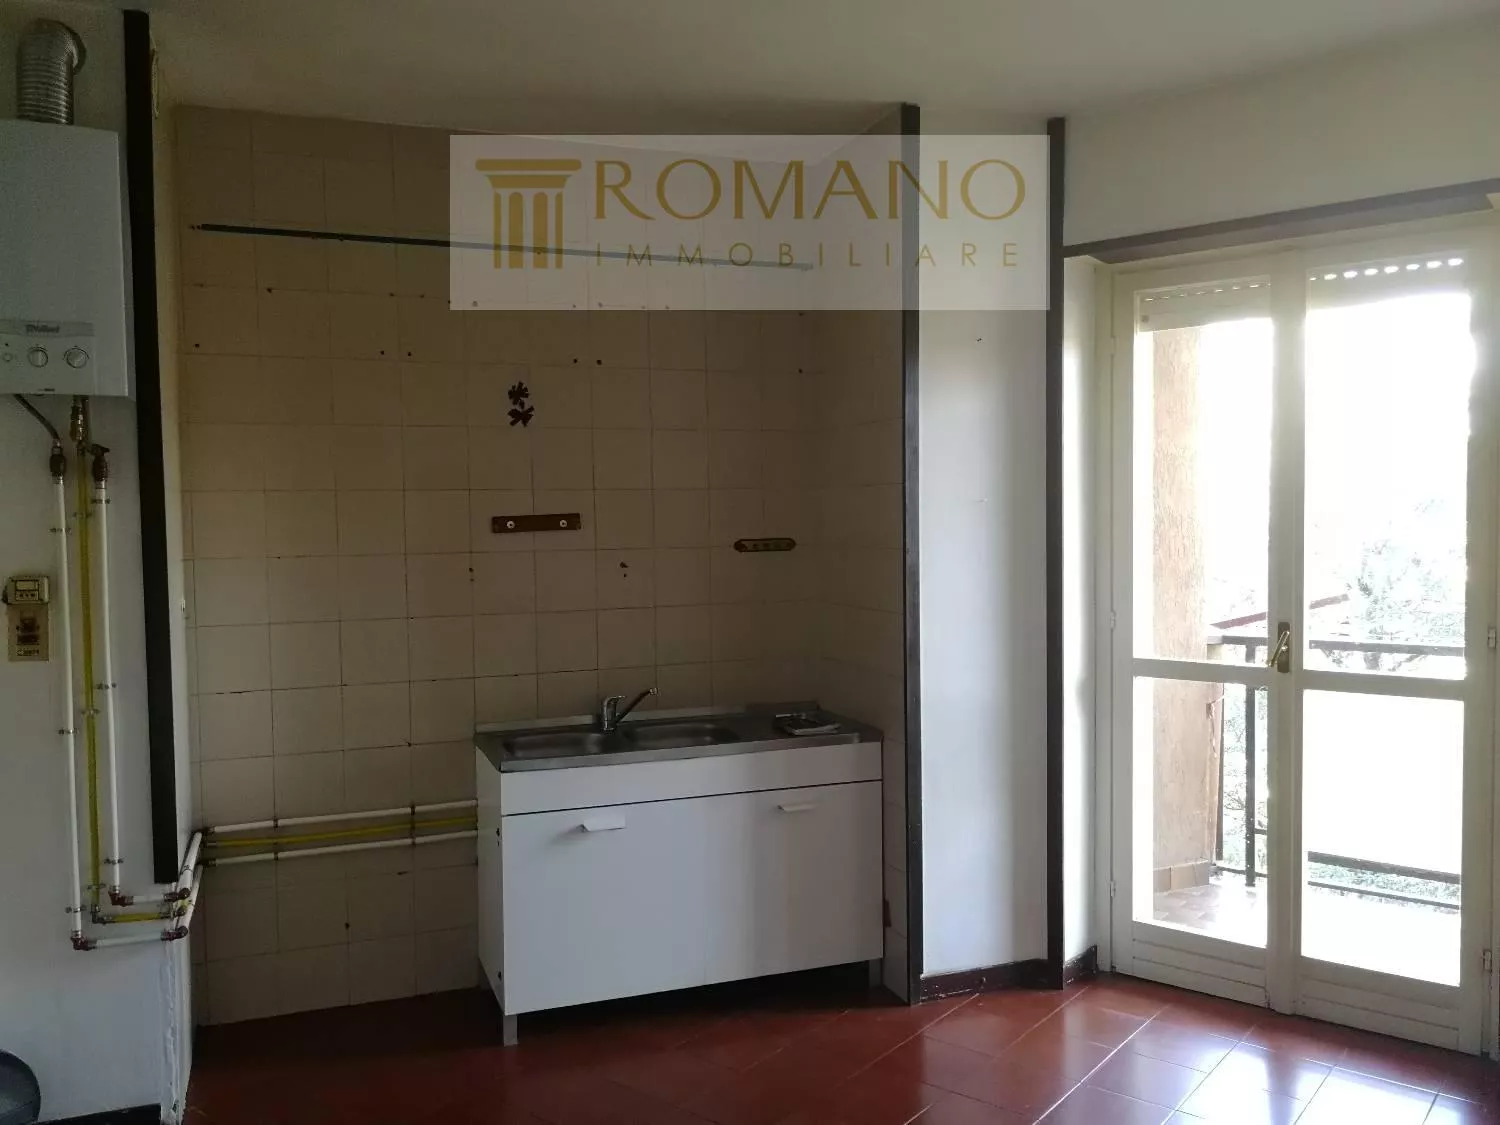 Immagine per Appartamento in affitto a San Mauro Torinese via Toscana 22